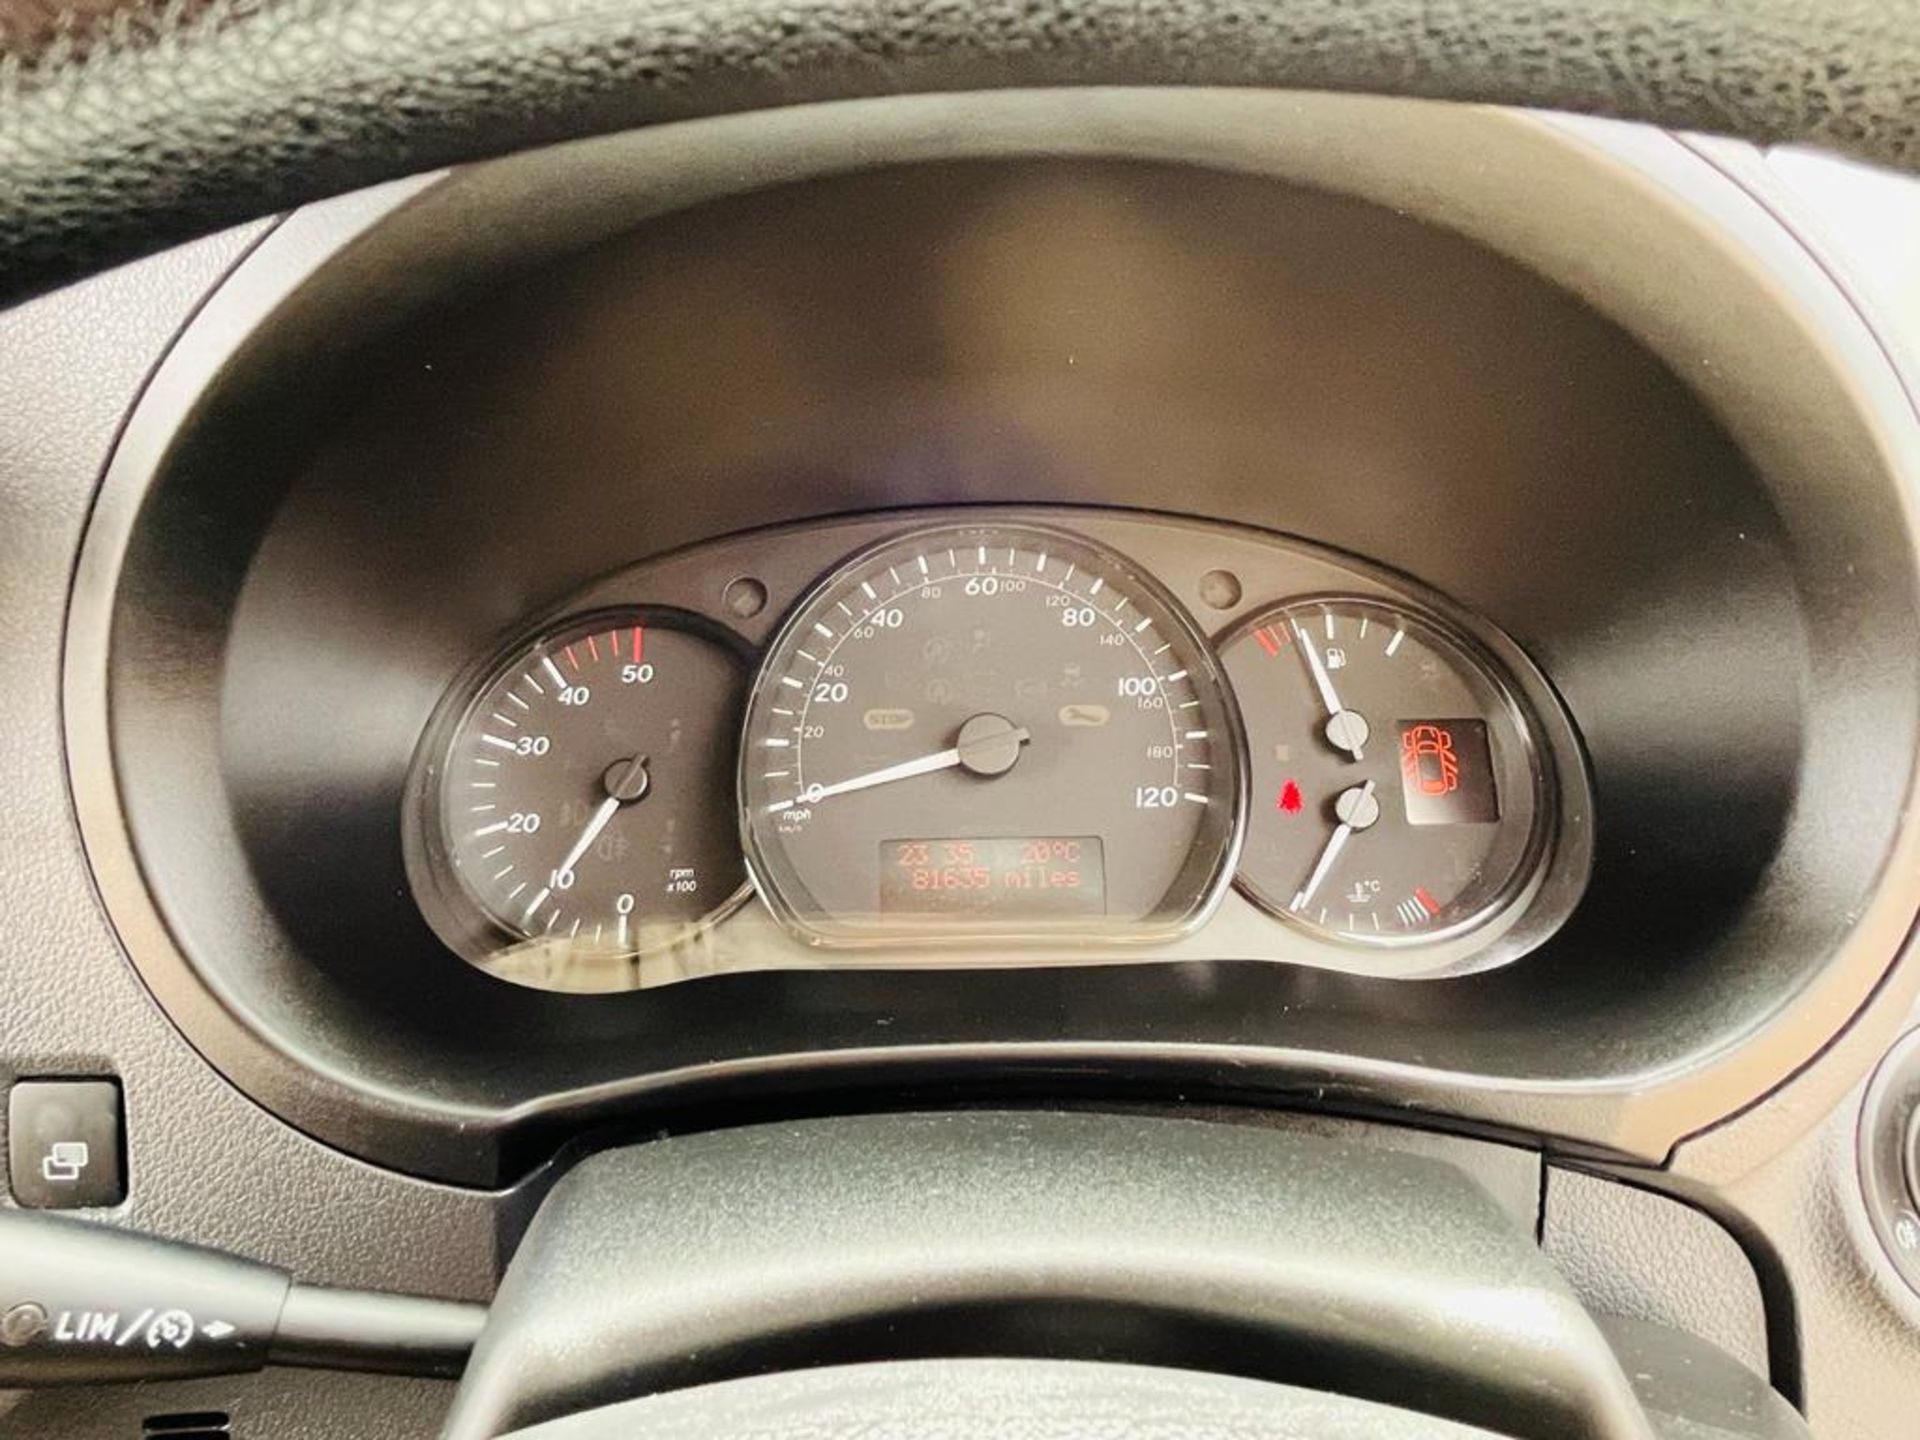 ** ON SALE ** Mercedes Benz Citan 1.5 CDI 109 LWB 2014 '14 Reg' - Panel Van - NO VAT - Image 26 of 26